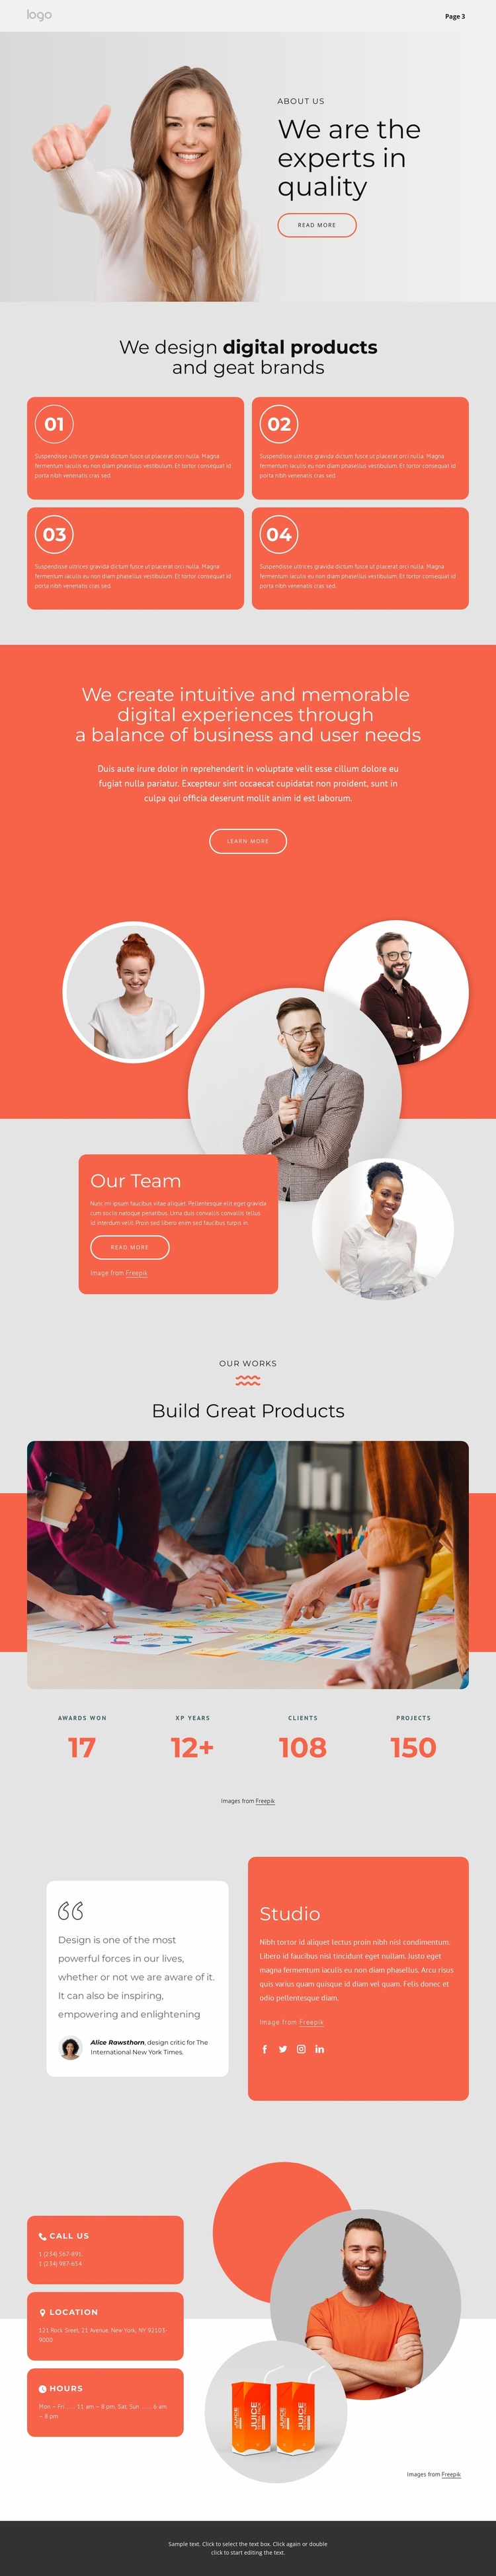 We design great brands eCommerce Website Design